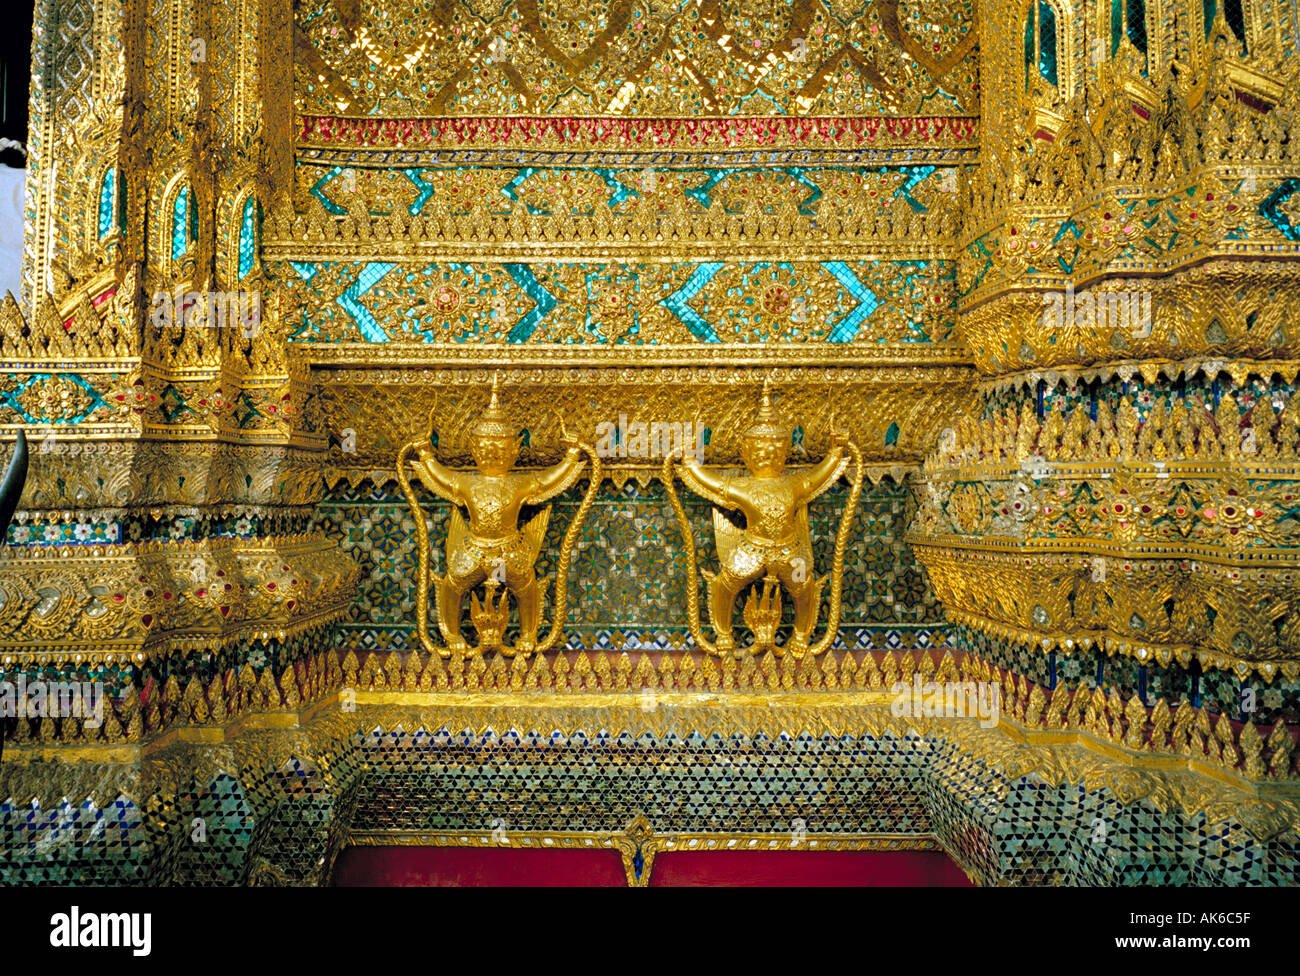 Royal Grand Palace, Bangkok - 112 garudas (mythical man/bird creatures) holding serpents encircle the bot of the Emerald Buddha, Stock Photo